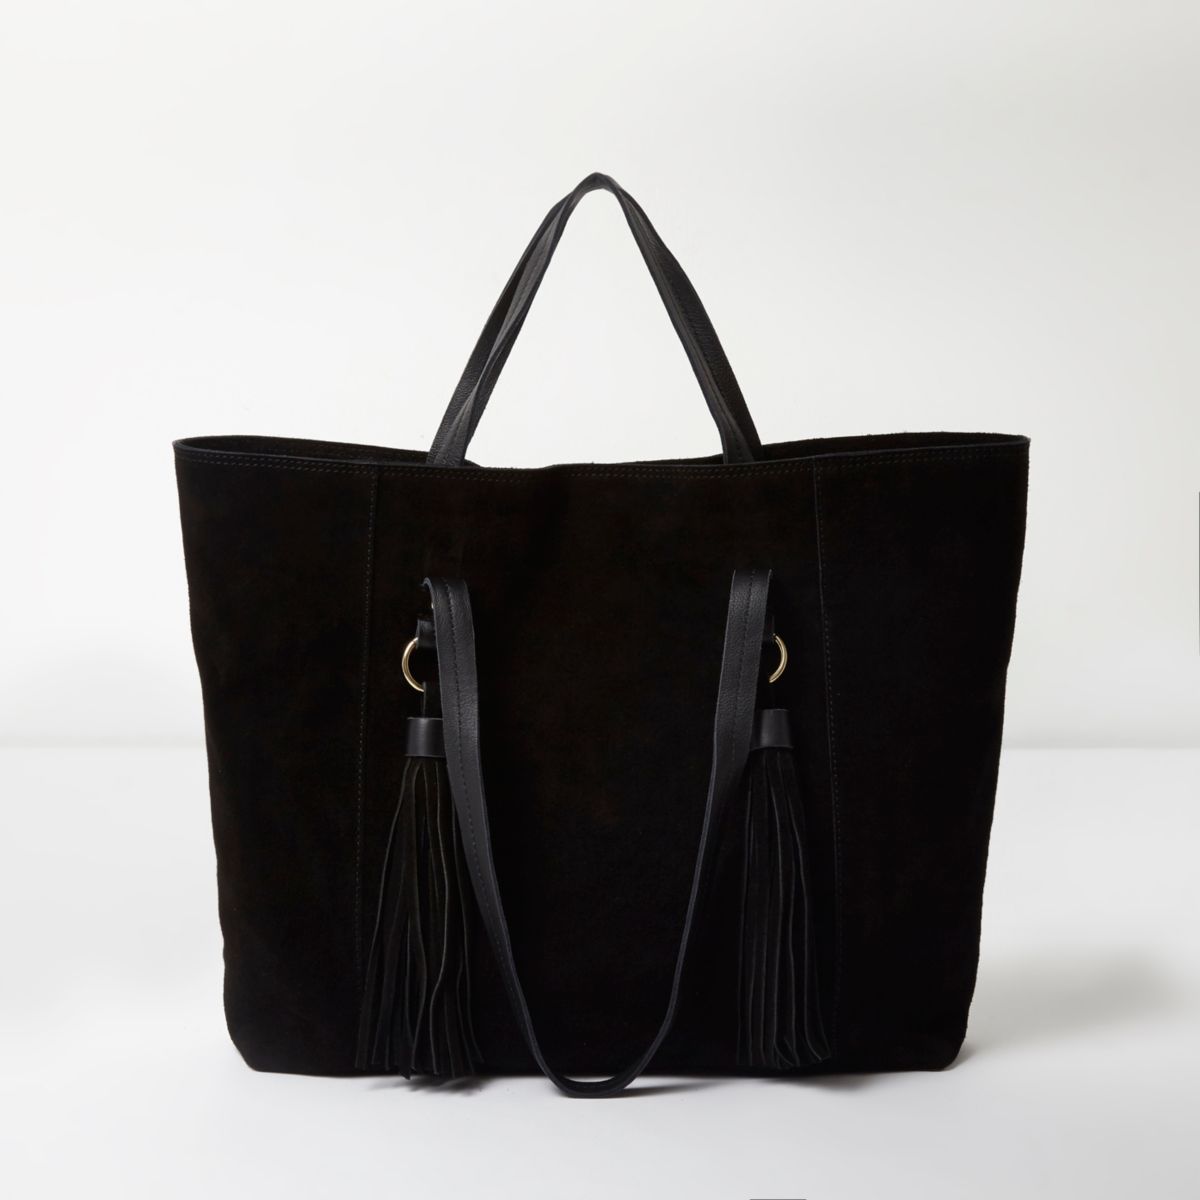 Black suede tassel underarm tote bag - Shopper & Tote Bags - Bags ...